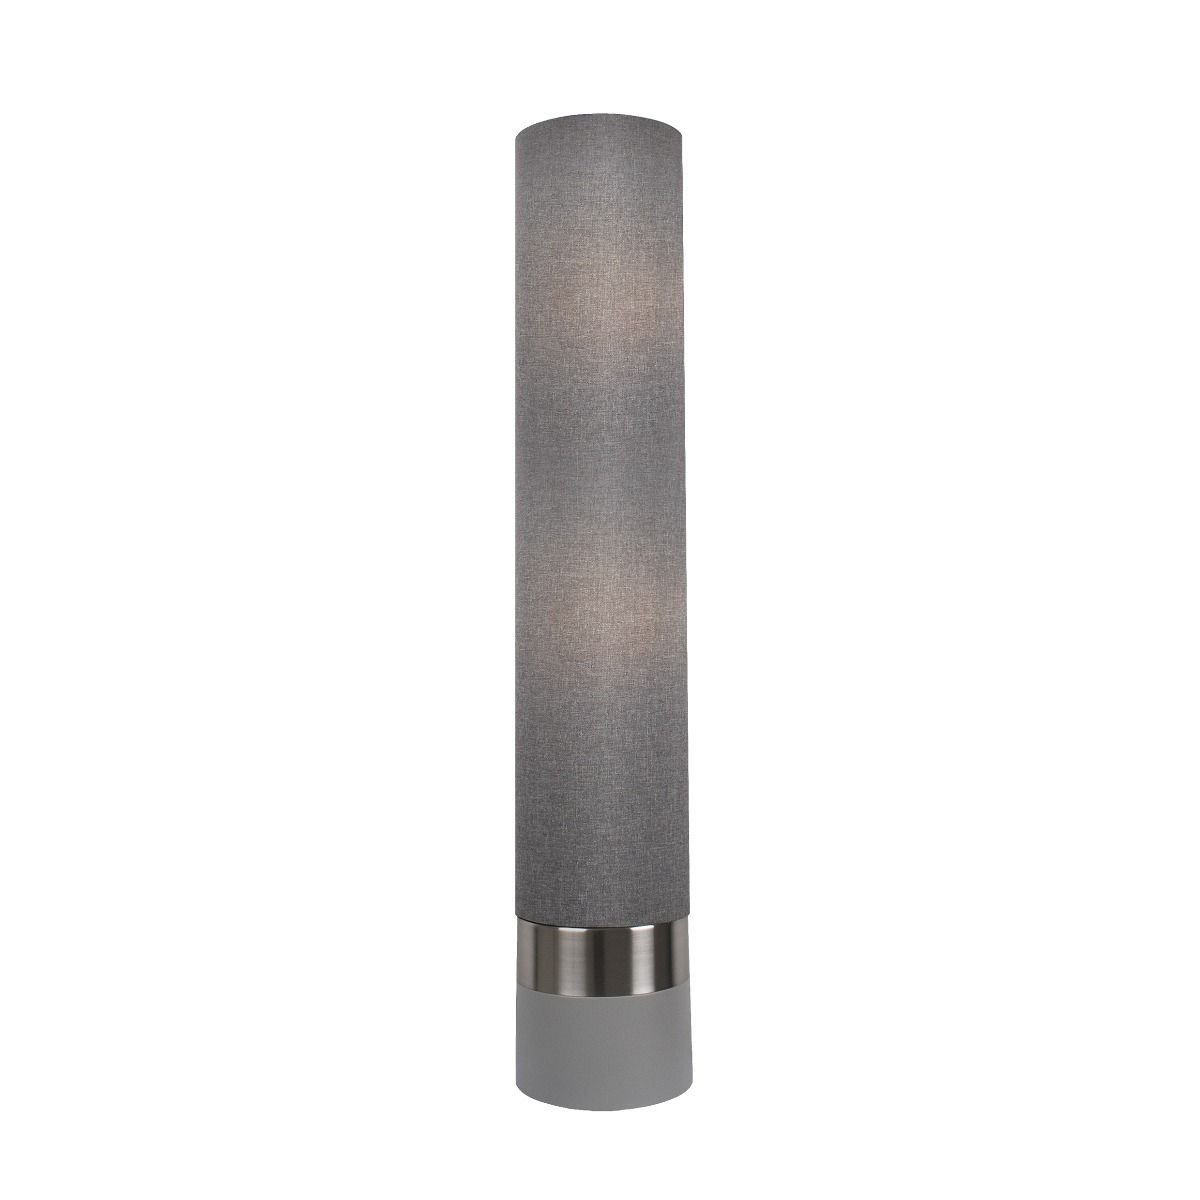 Yana 2 Tone Tower Floor Lamp Satin Nickel Floor Lamp with Grey Cotton Weave Shade